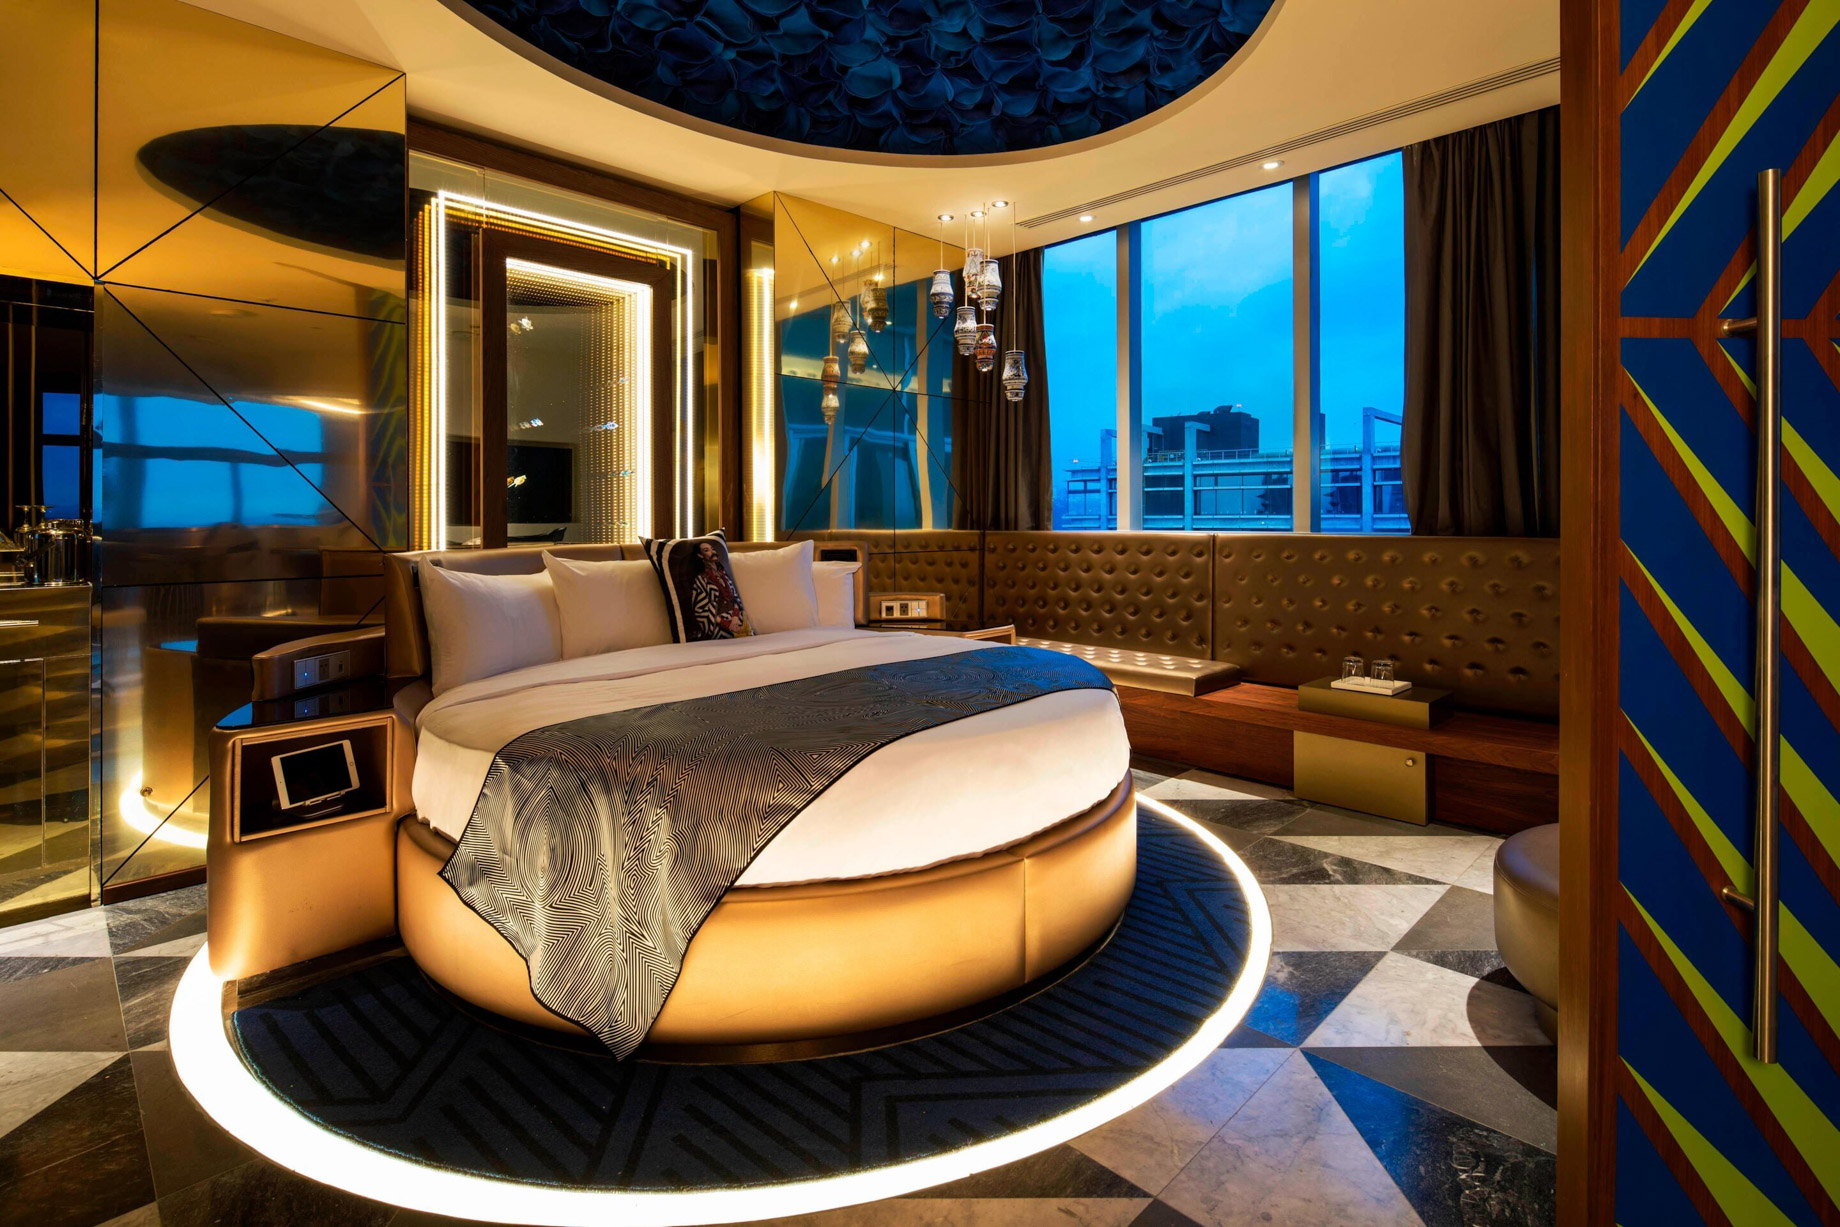 W Mexico City Hotel - Polanco, Mexico City, Mexico - E WOW Suite King Round